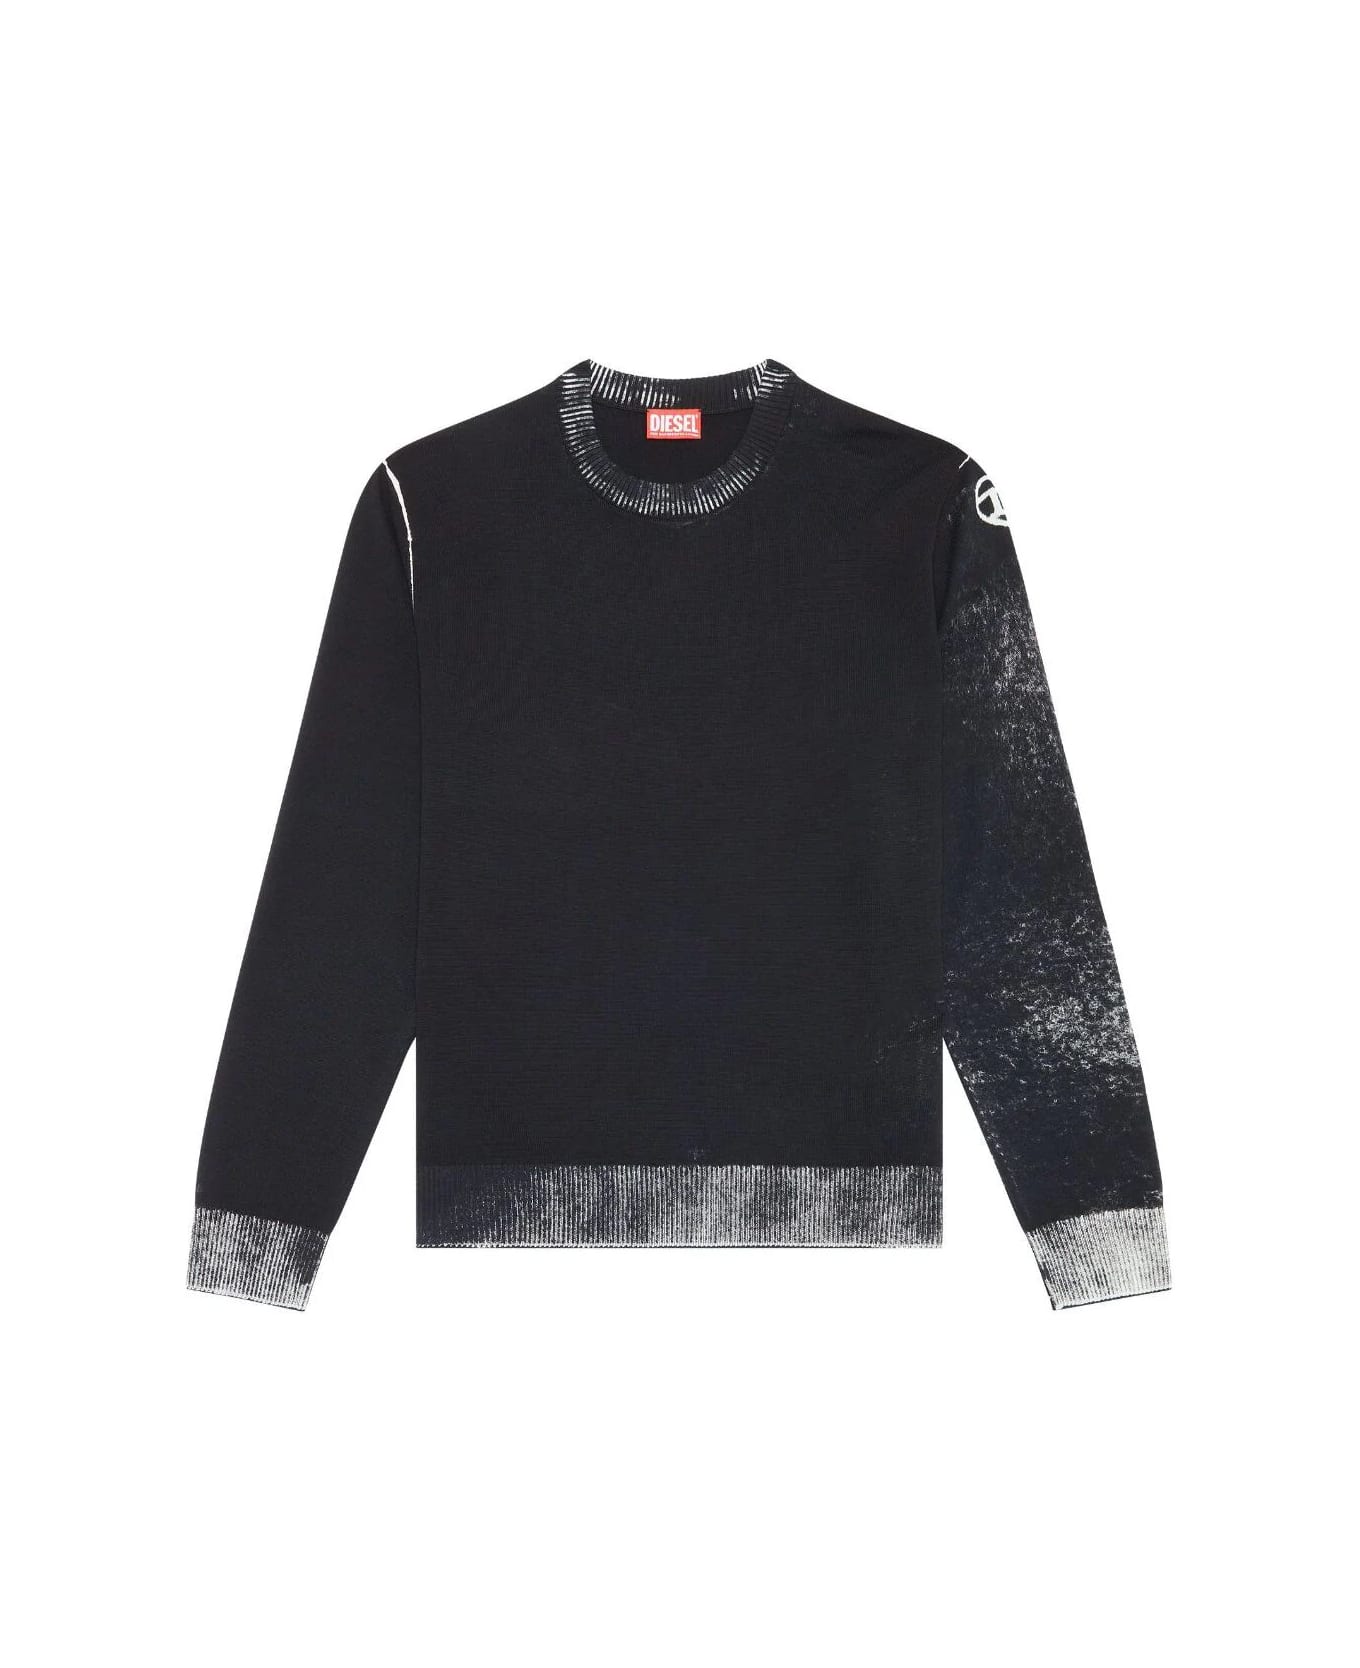 Diesel Larence Sweater - Xx Black フリース